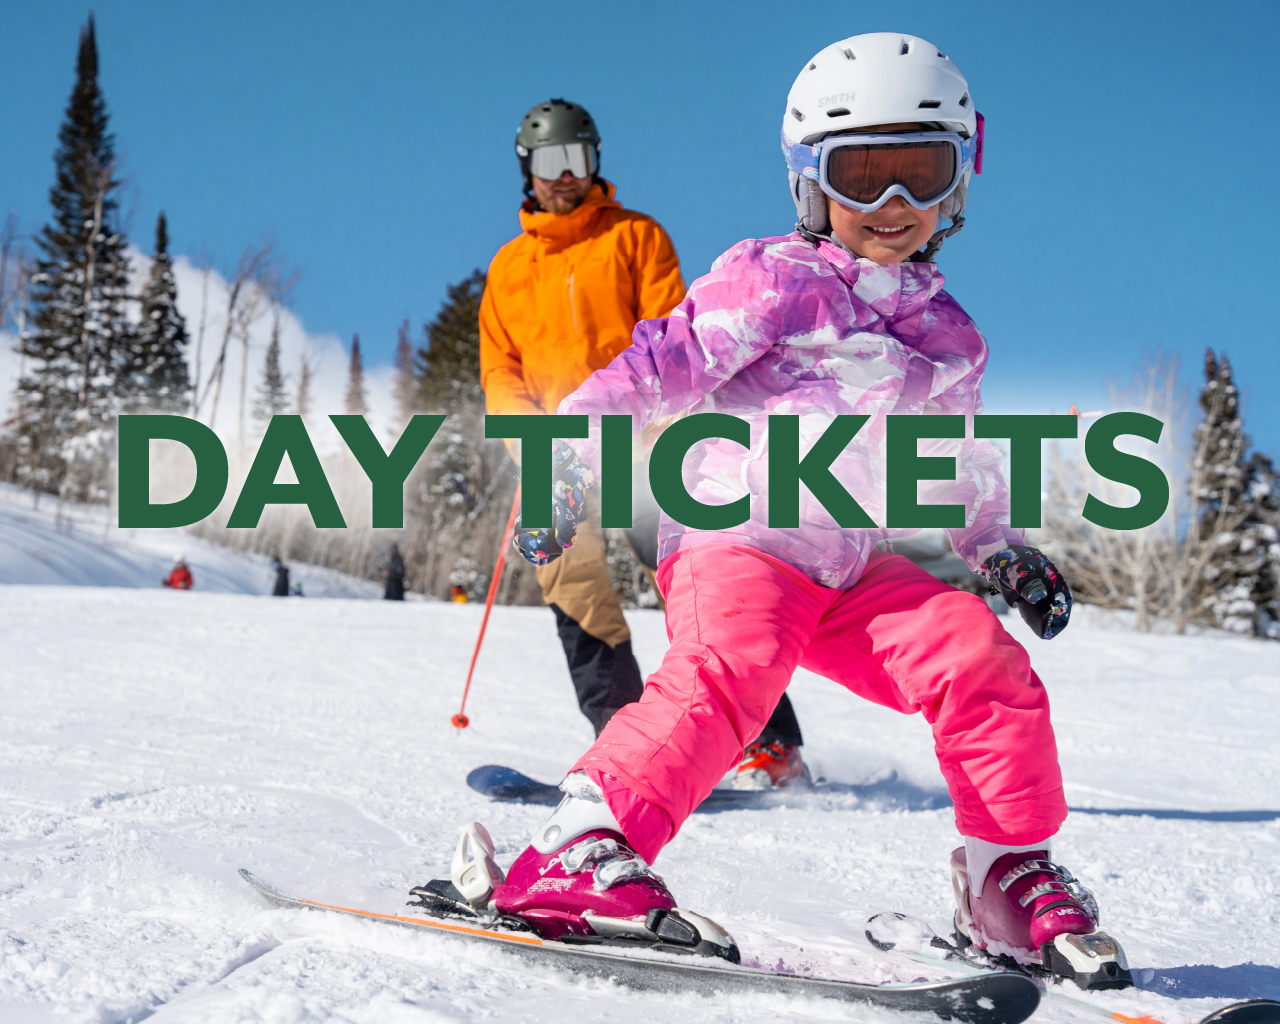 Day Tickets button, skier child with adult at Powderhorn Mountain Resort